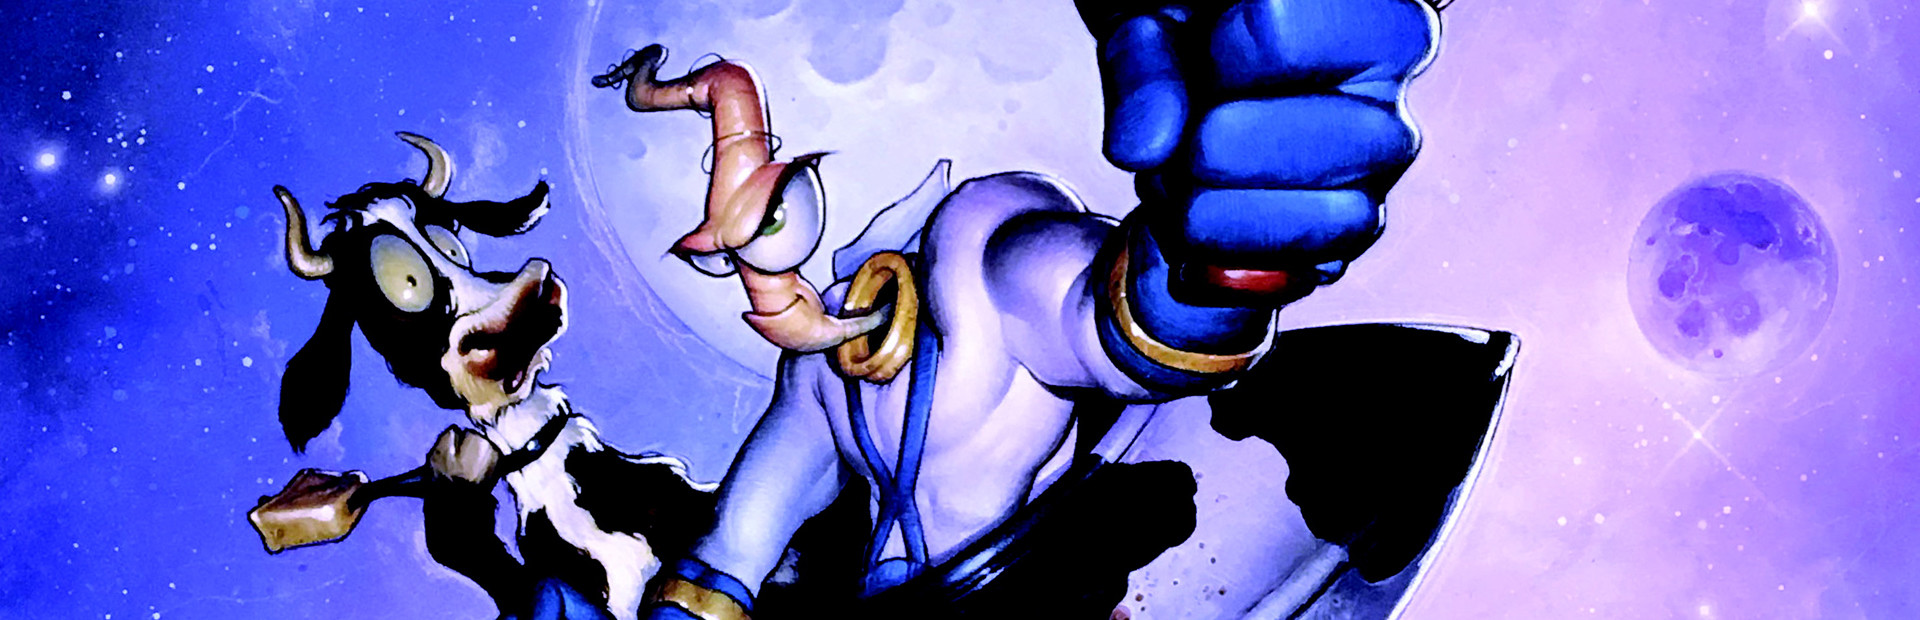 Earthworm Jim 2 cover image